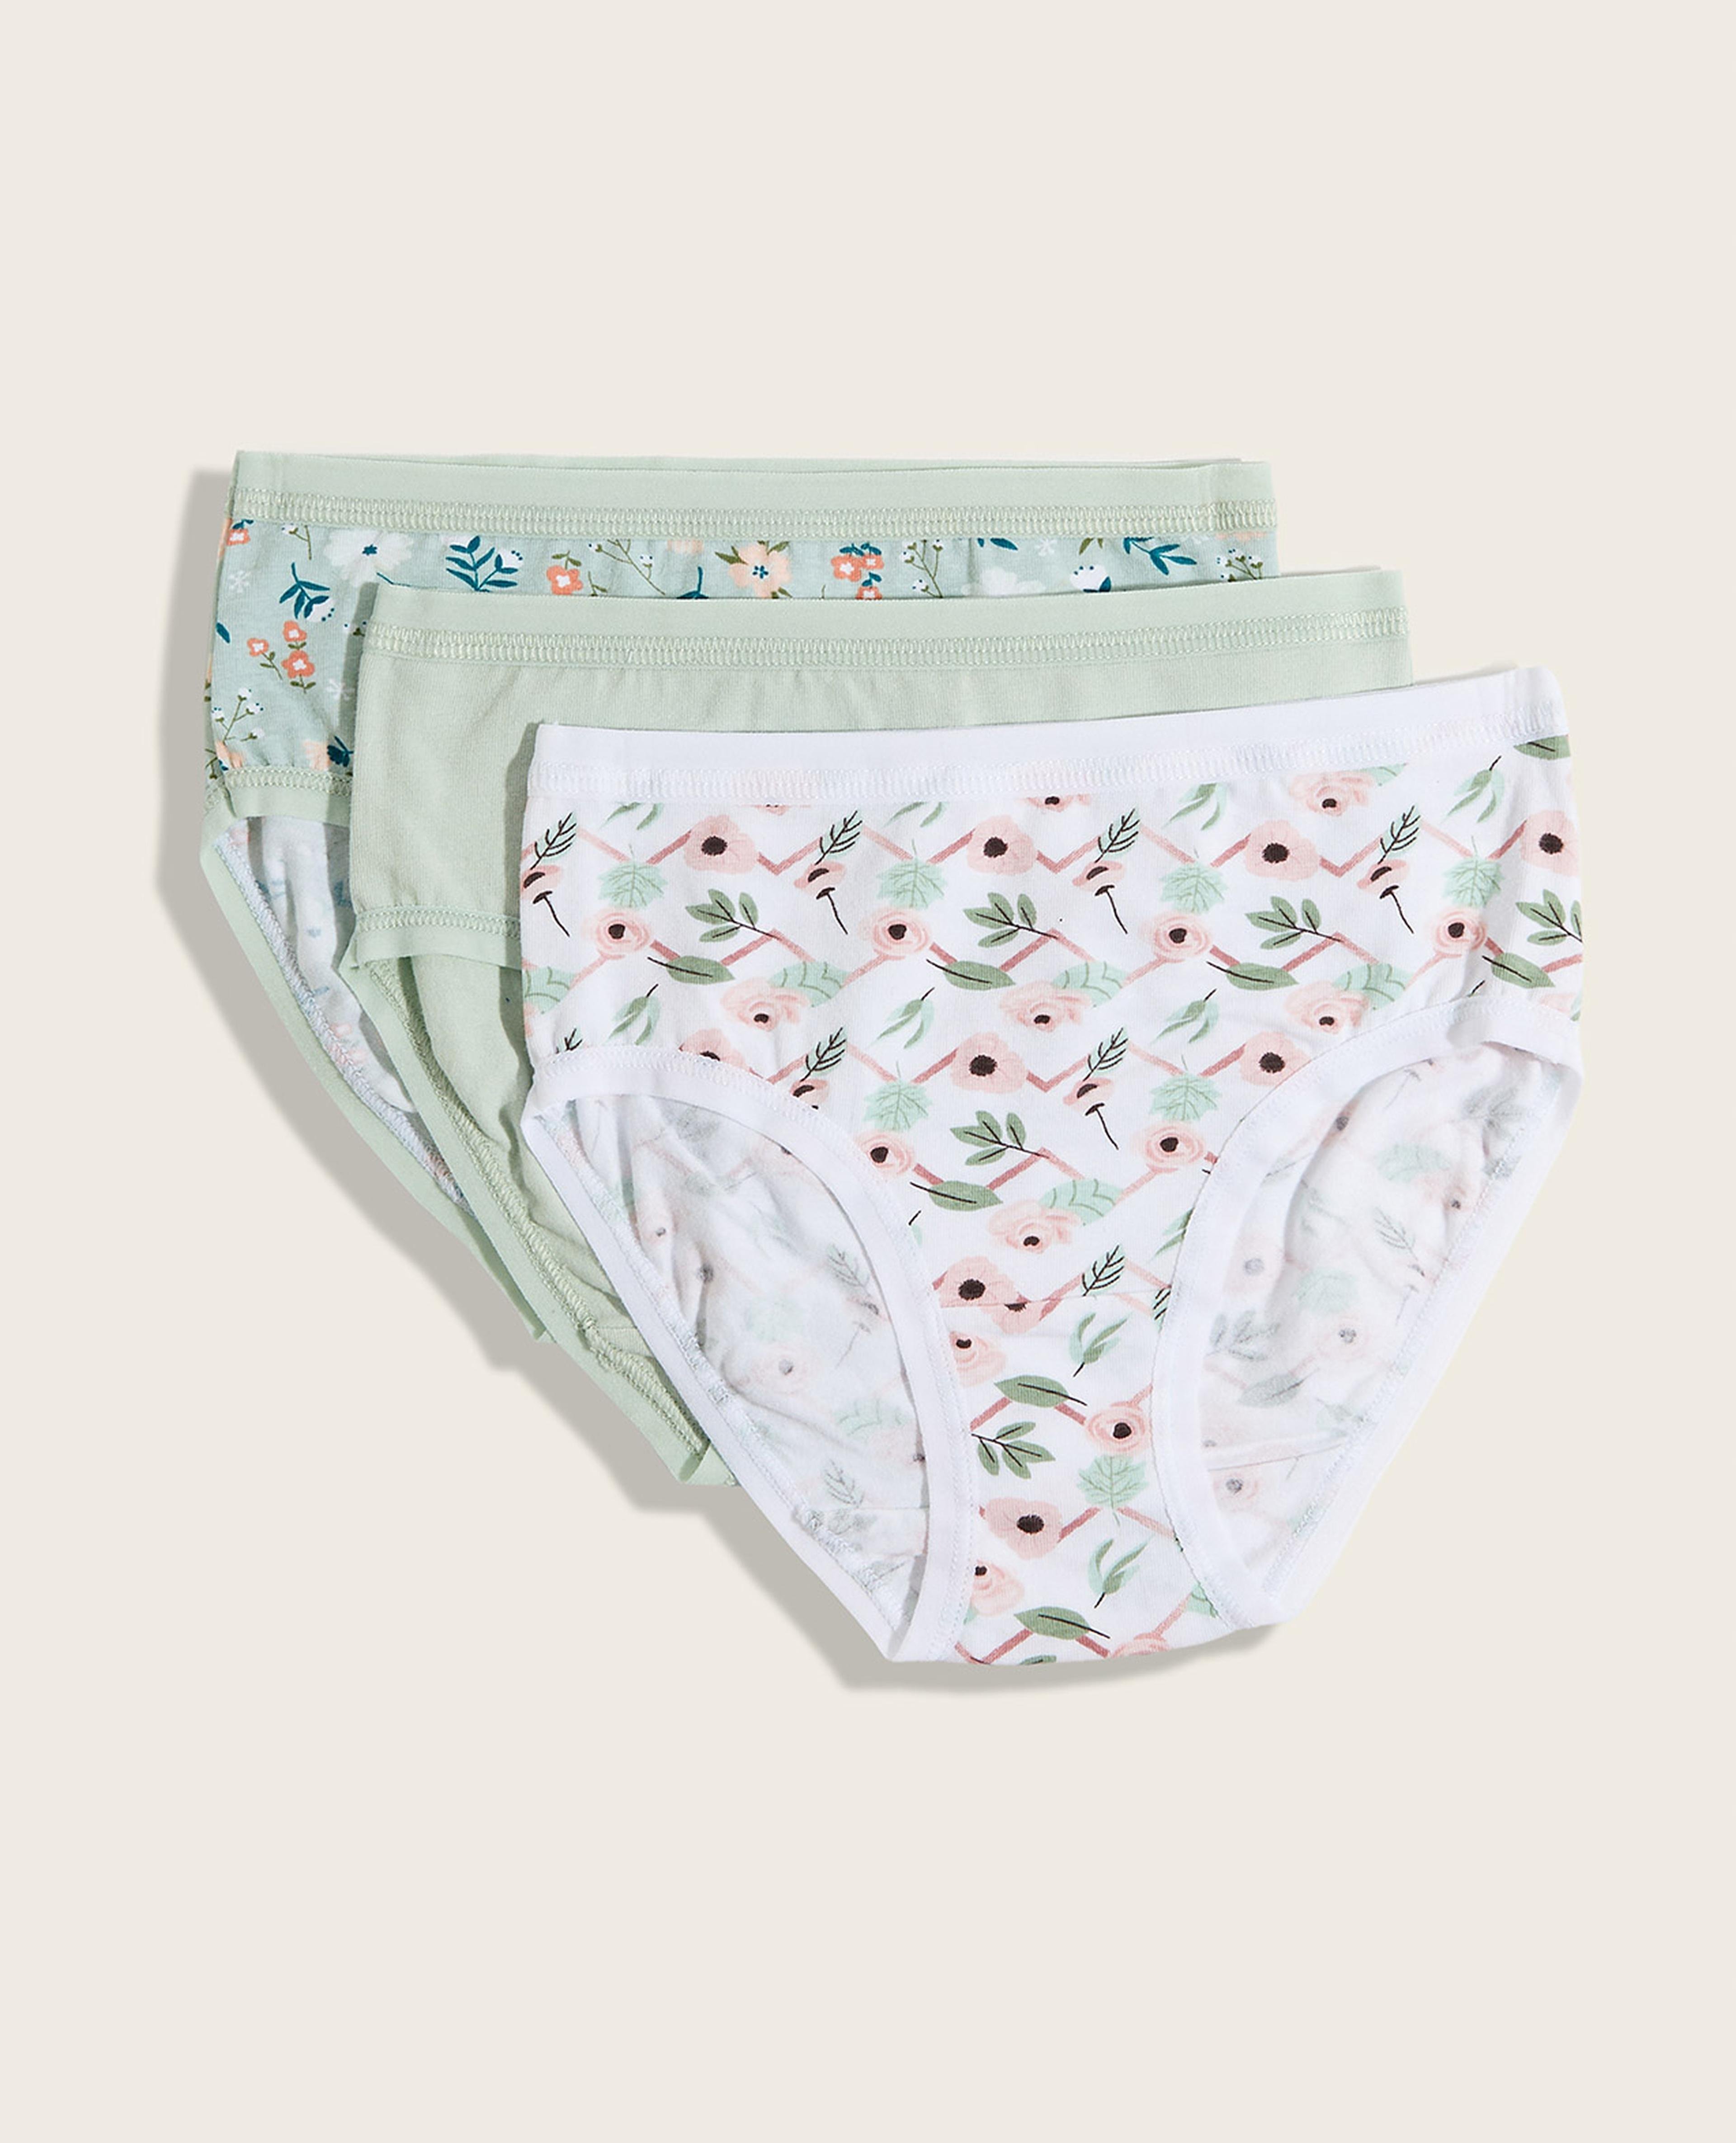 Akiihool Women Panties Cotton Mid Waist No Muffin Top Full Coverage Brief  Ladies Panties Lingerie Undergarments for Women (Beige,XXL)